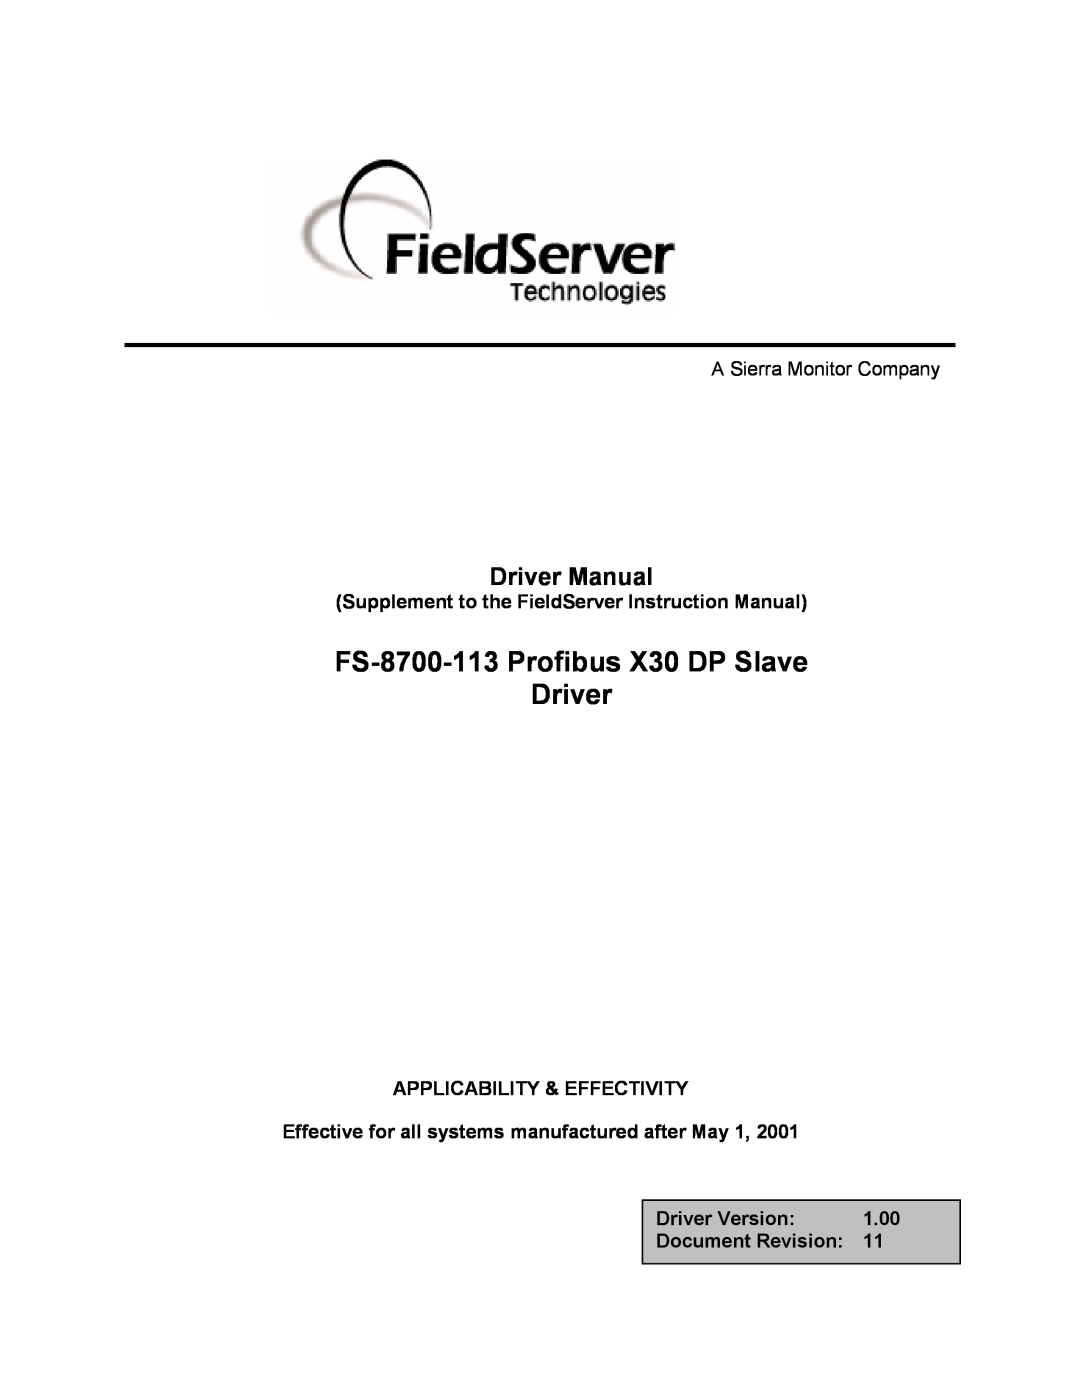 FieldServer instruction manual FS-8700-113 Profibus X30 DP Slave Driver, Driver Manual 